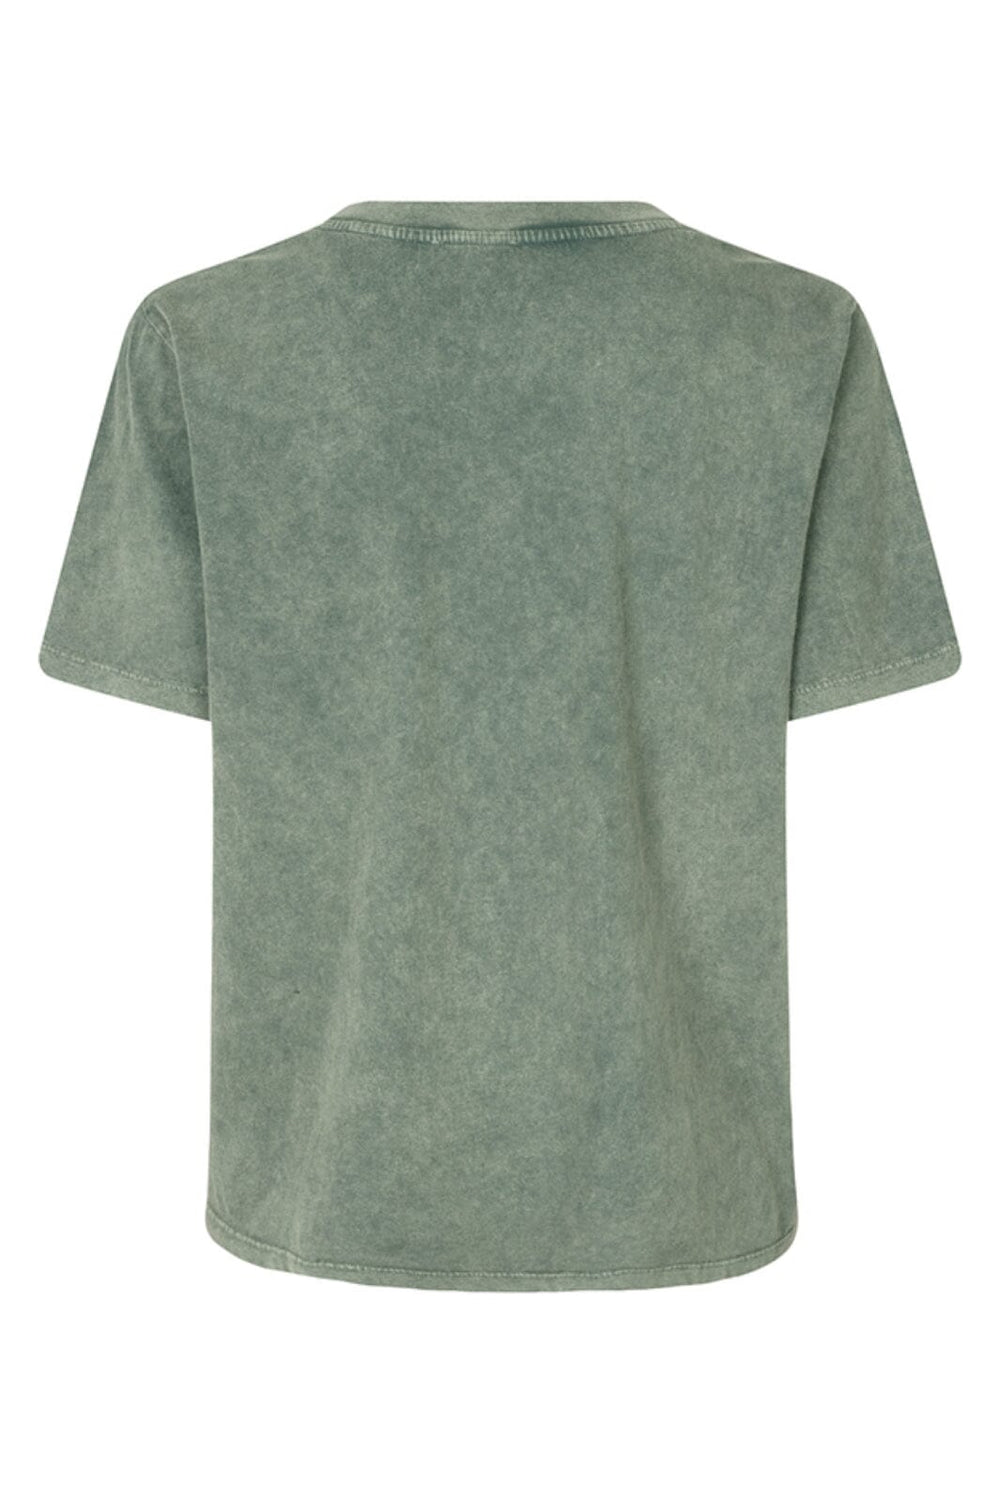 MbyM - North Carolina-M - Q16 Agave Green T-shirts 